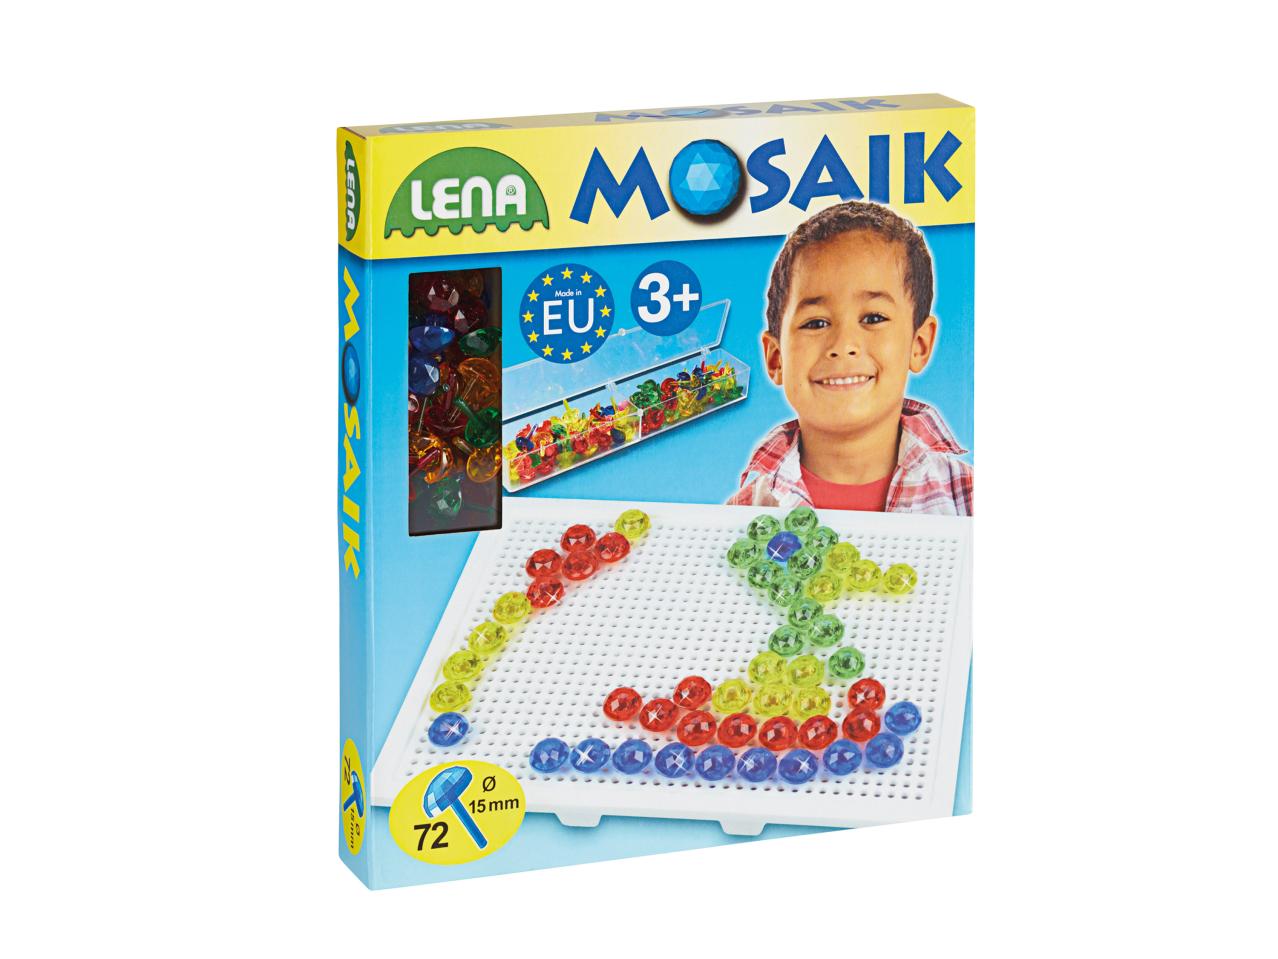 Lena Mosaic Craft Set1